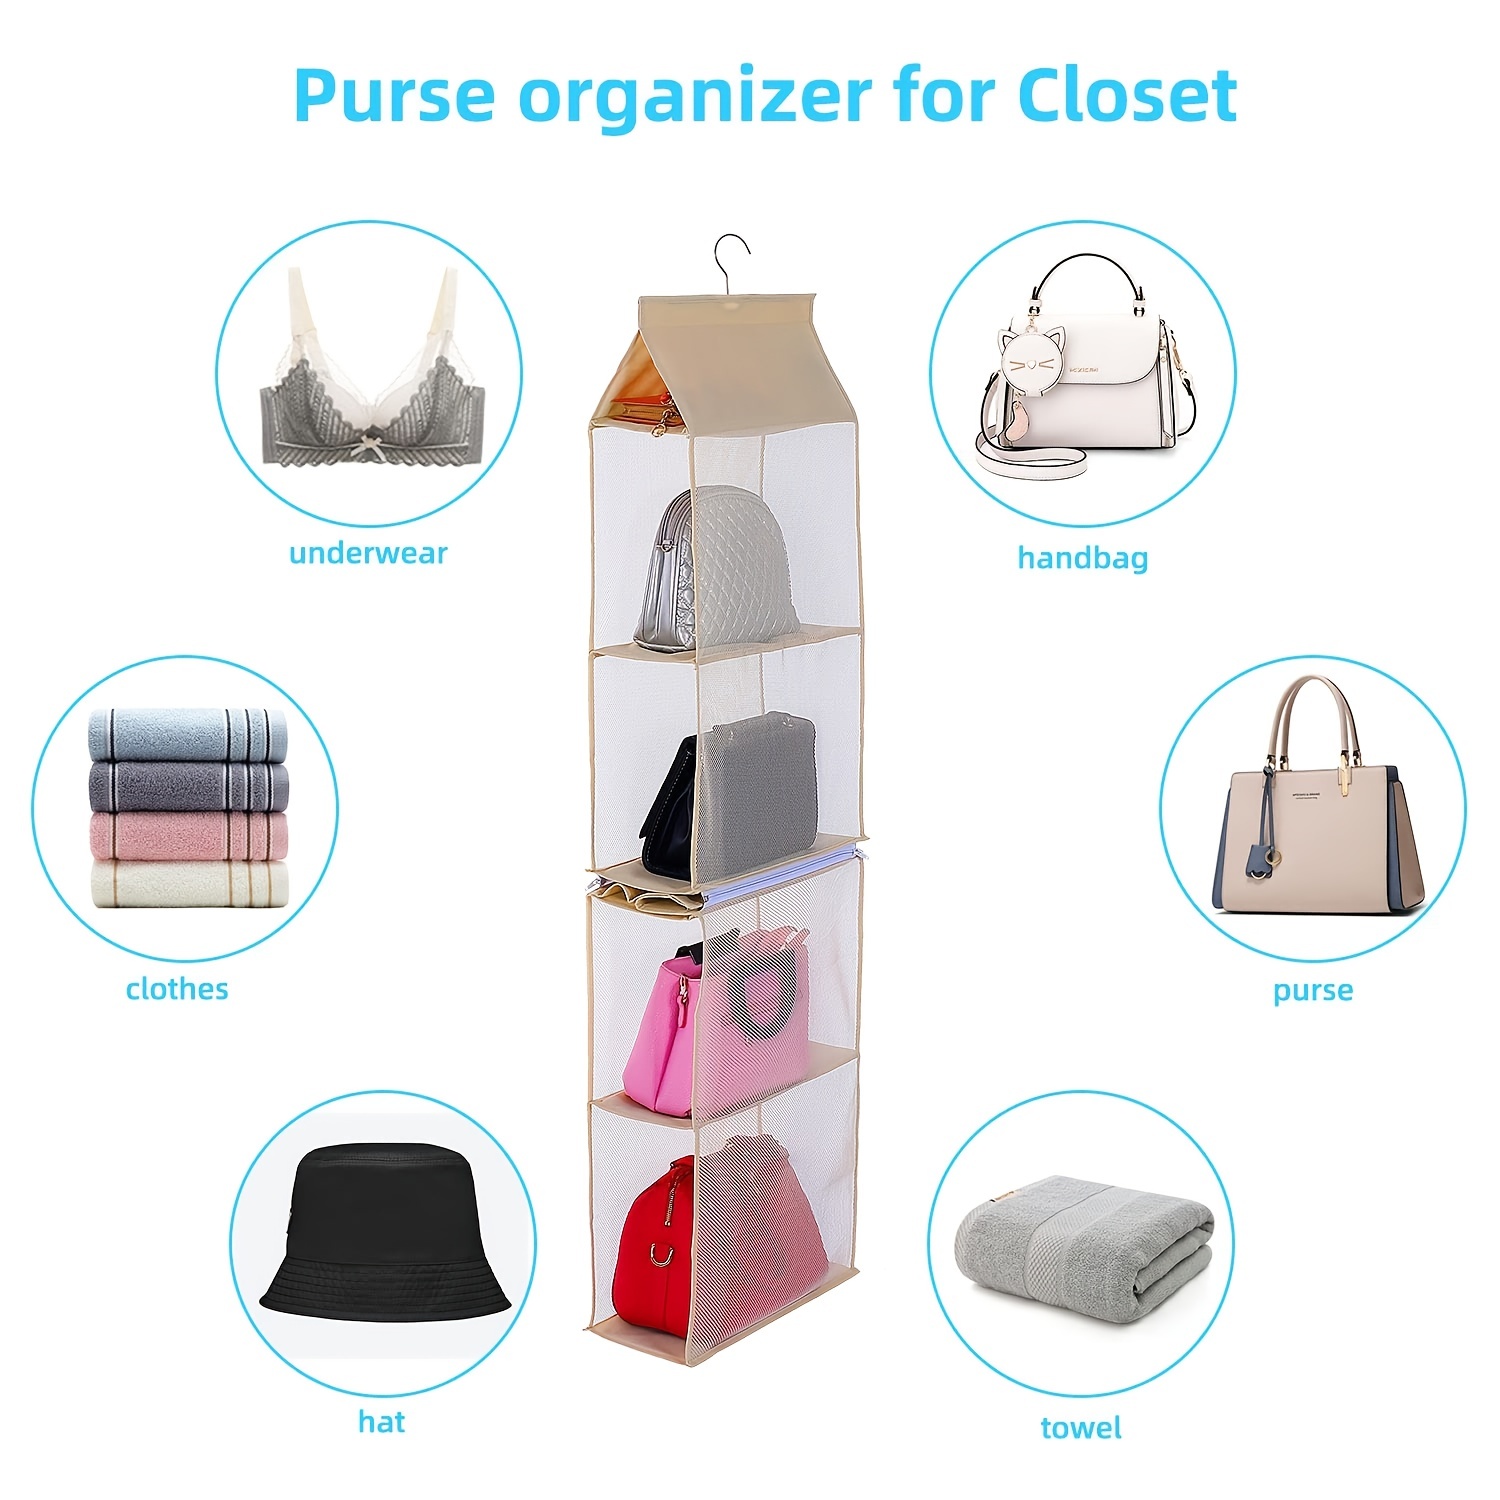 Purse Storage Purse Organizer for Closet, Clear Handbag Storage